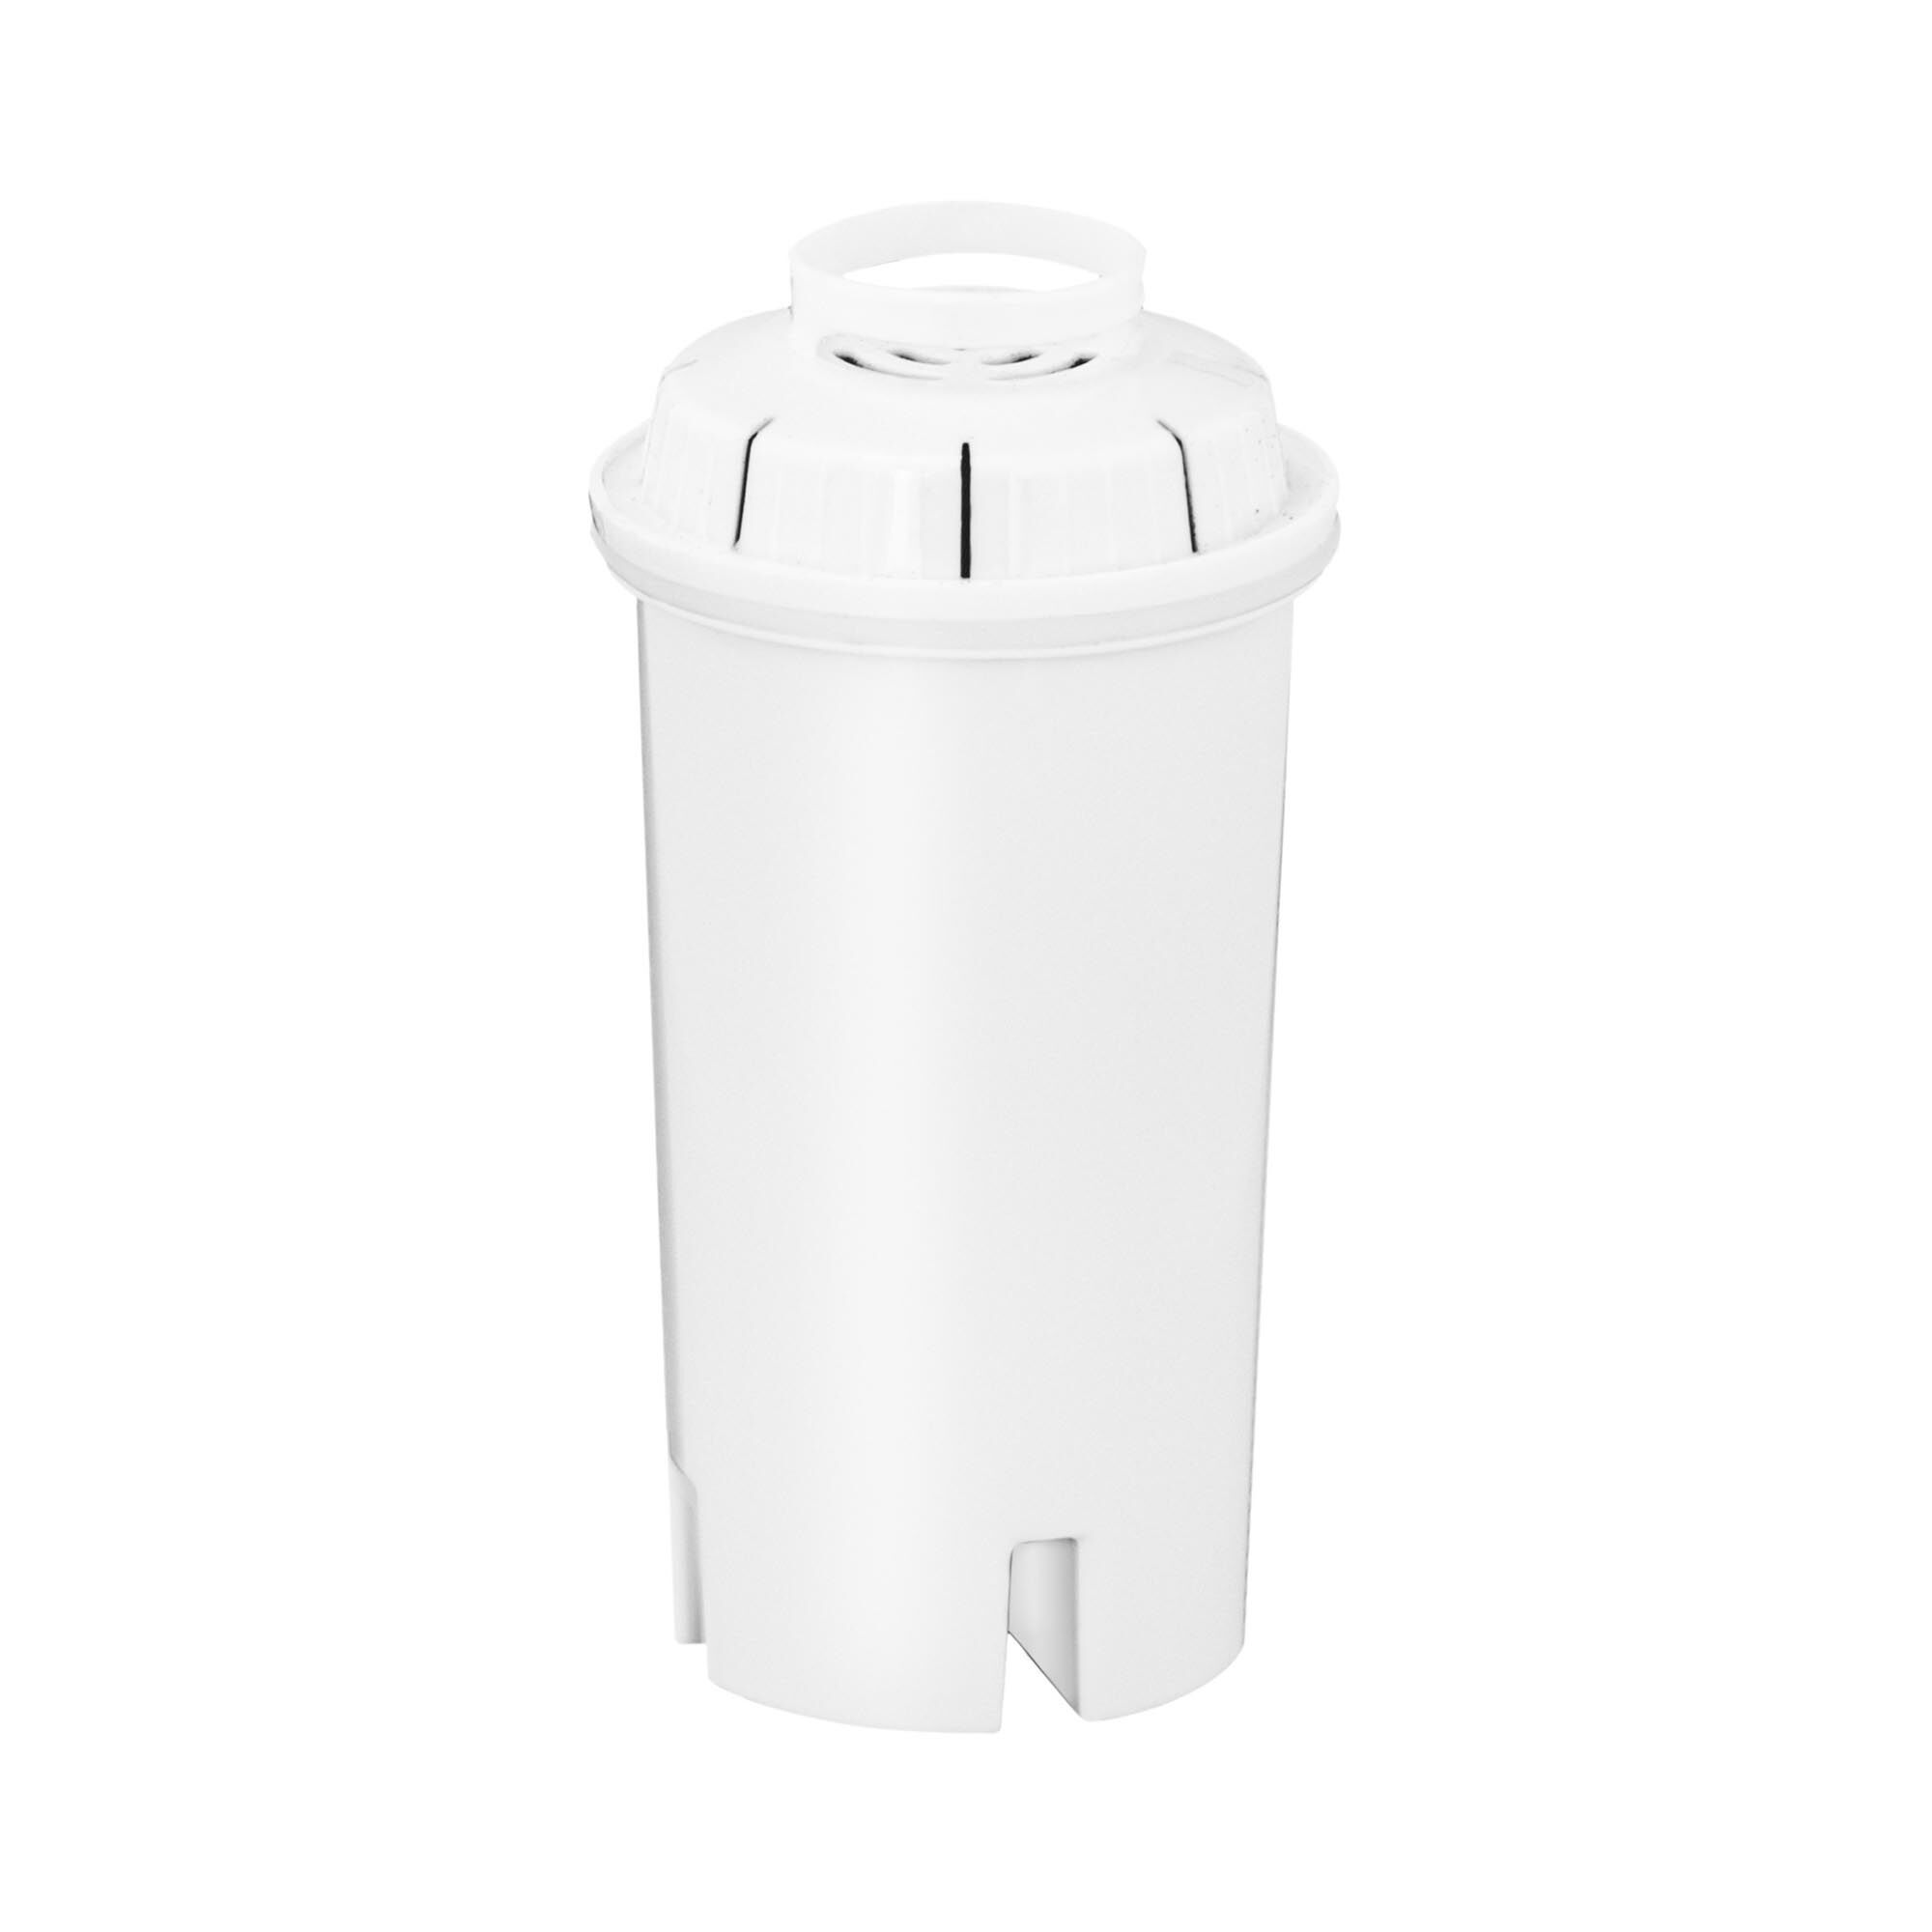 bredeco Hot Water Dispenser Filter - for 150 L - 3 pack